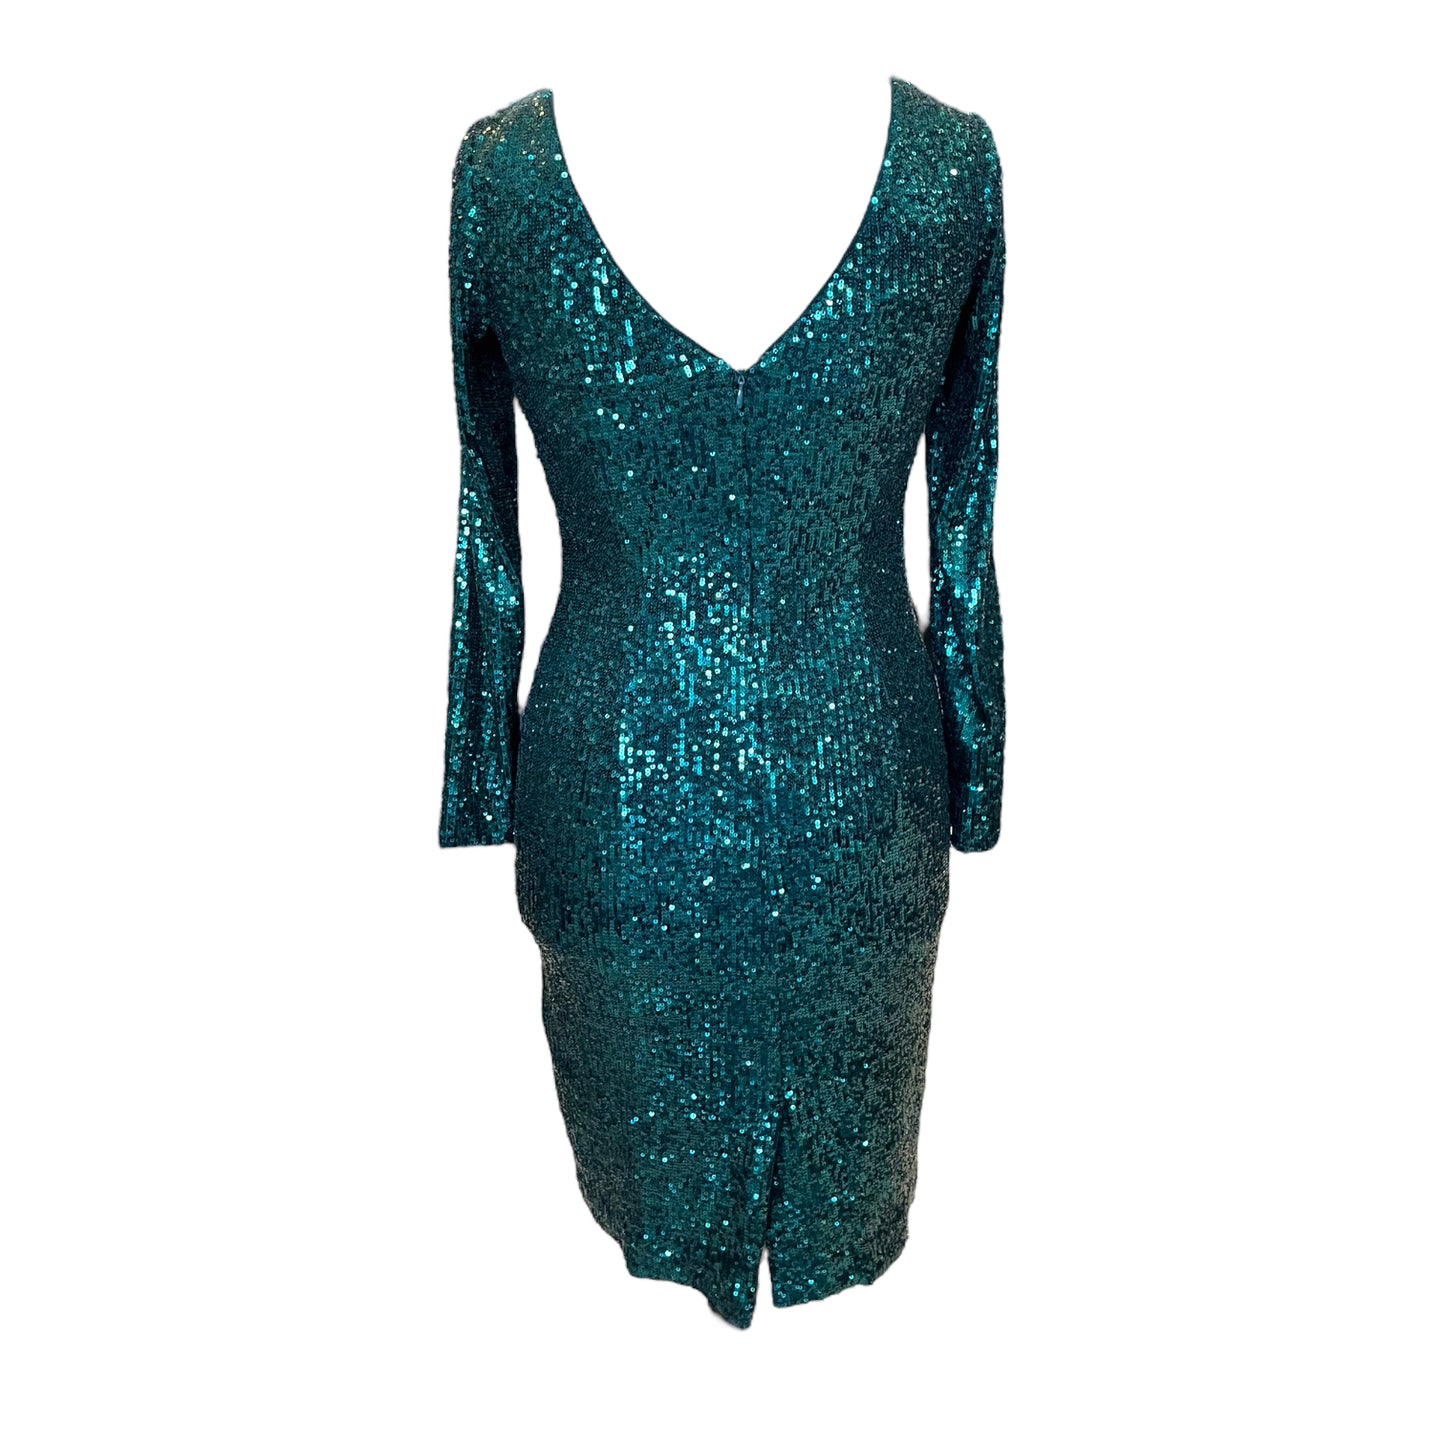 Hobbs Green Sparkly Dress